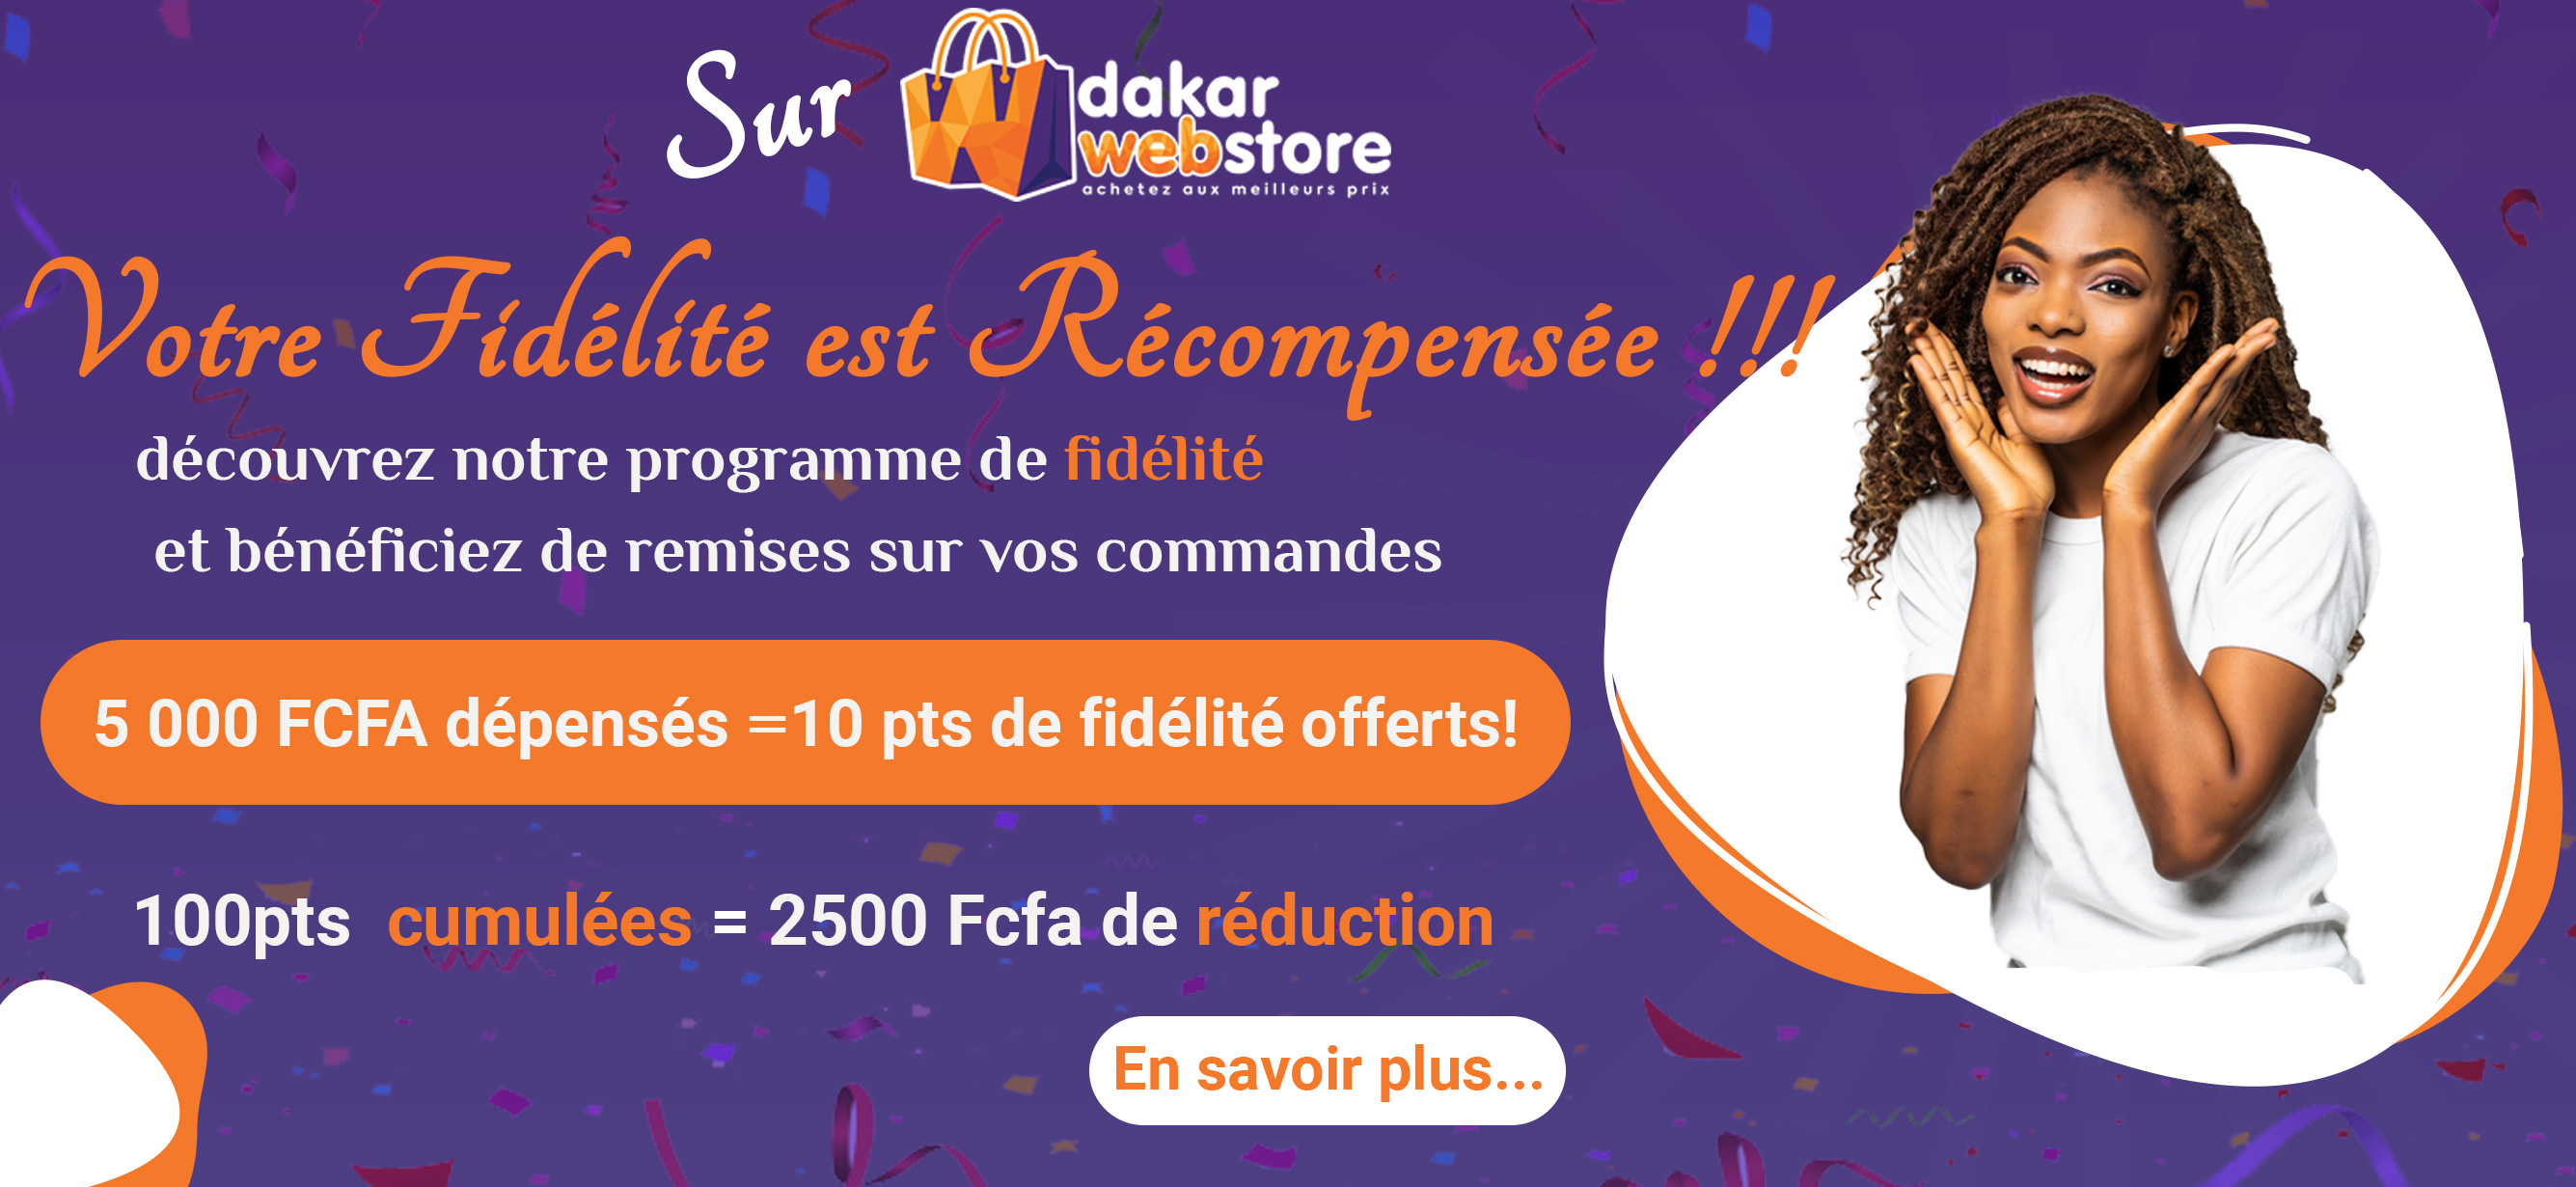 Dakarwebstore lance son Programme de Fidelité !!